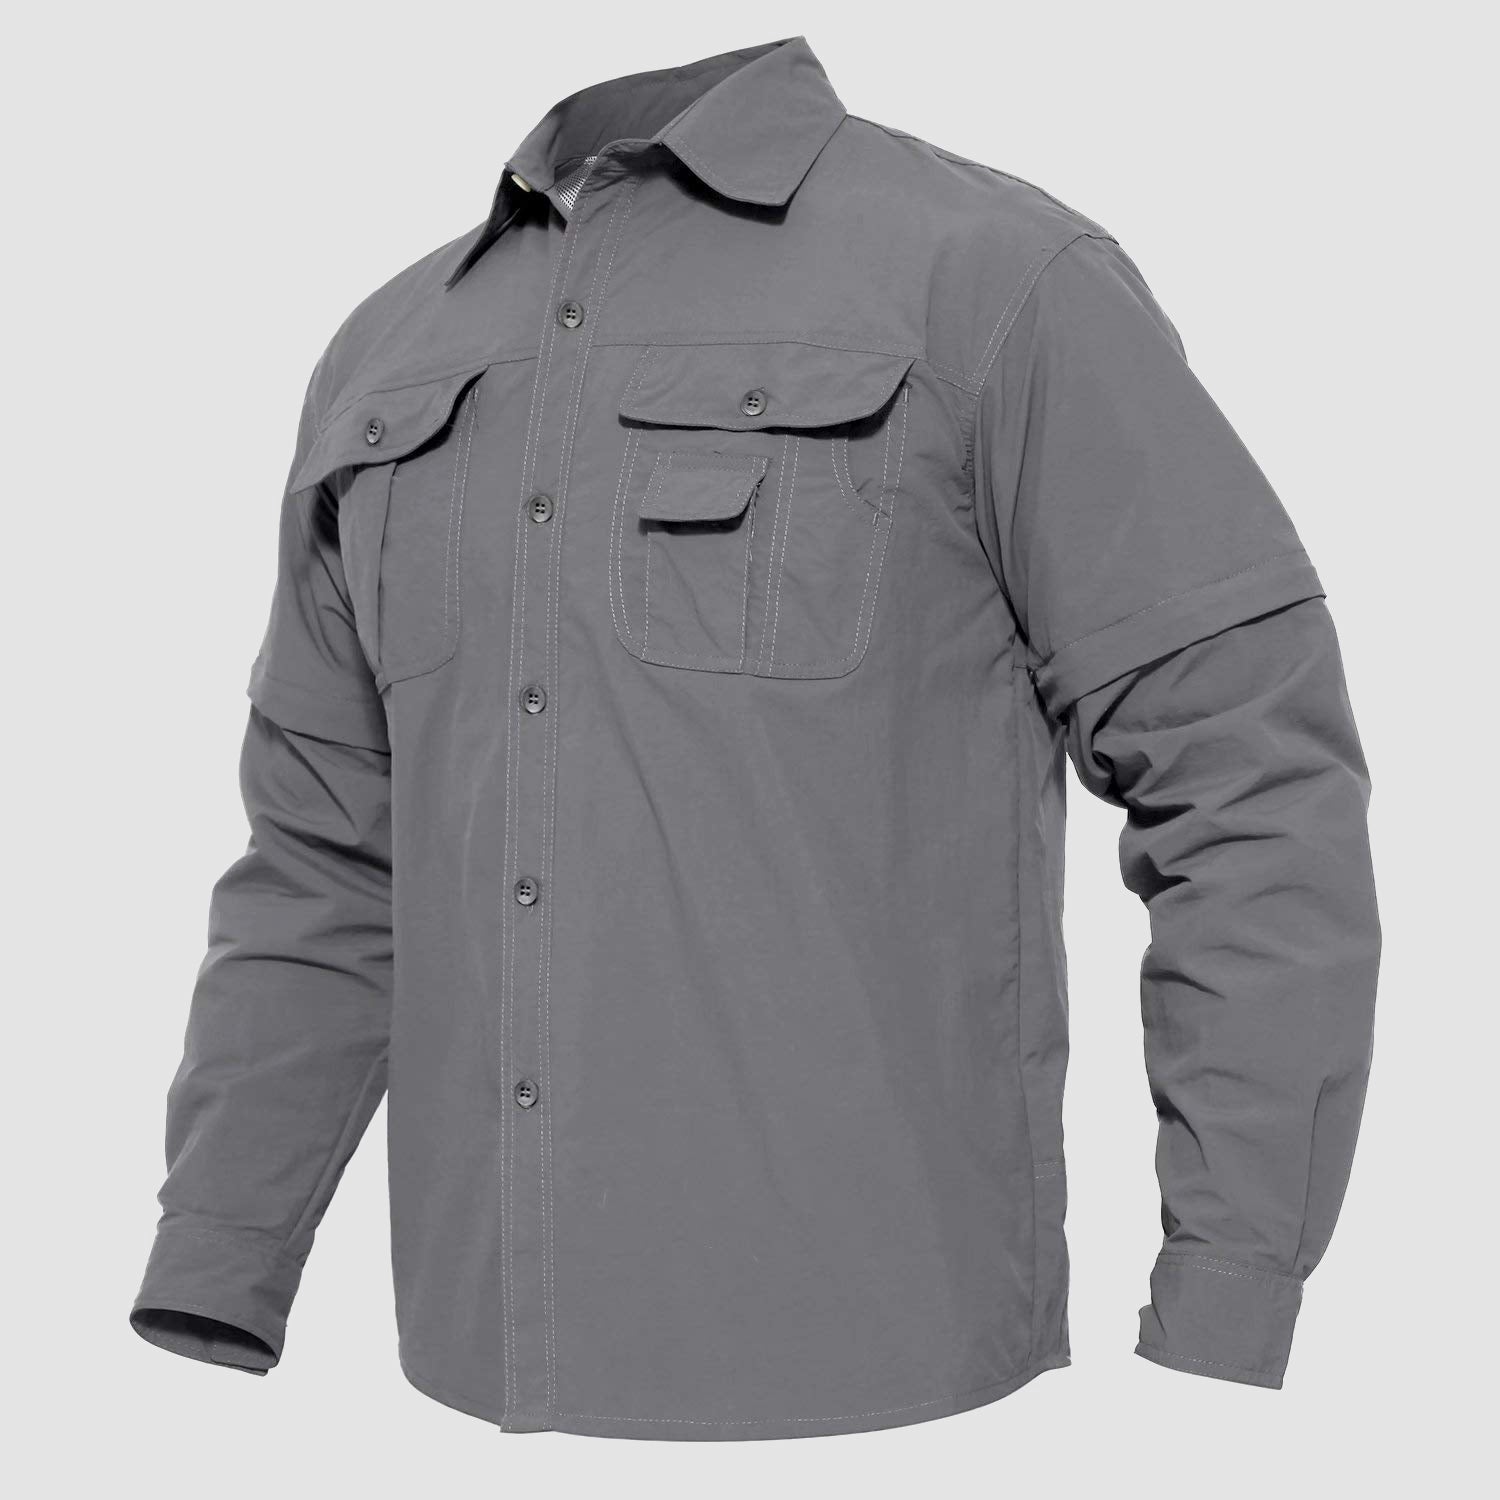 Mens Fishing Hiking Shirts with Detachable Sleeves Long/Short Sleeve Quick Dry, Light Grey / L